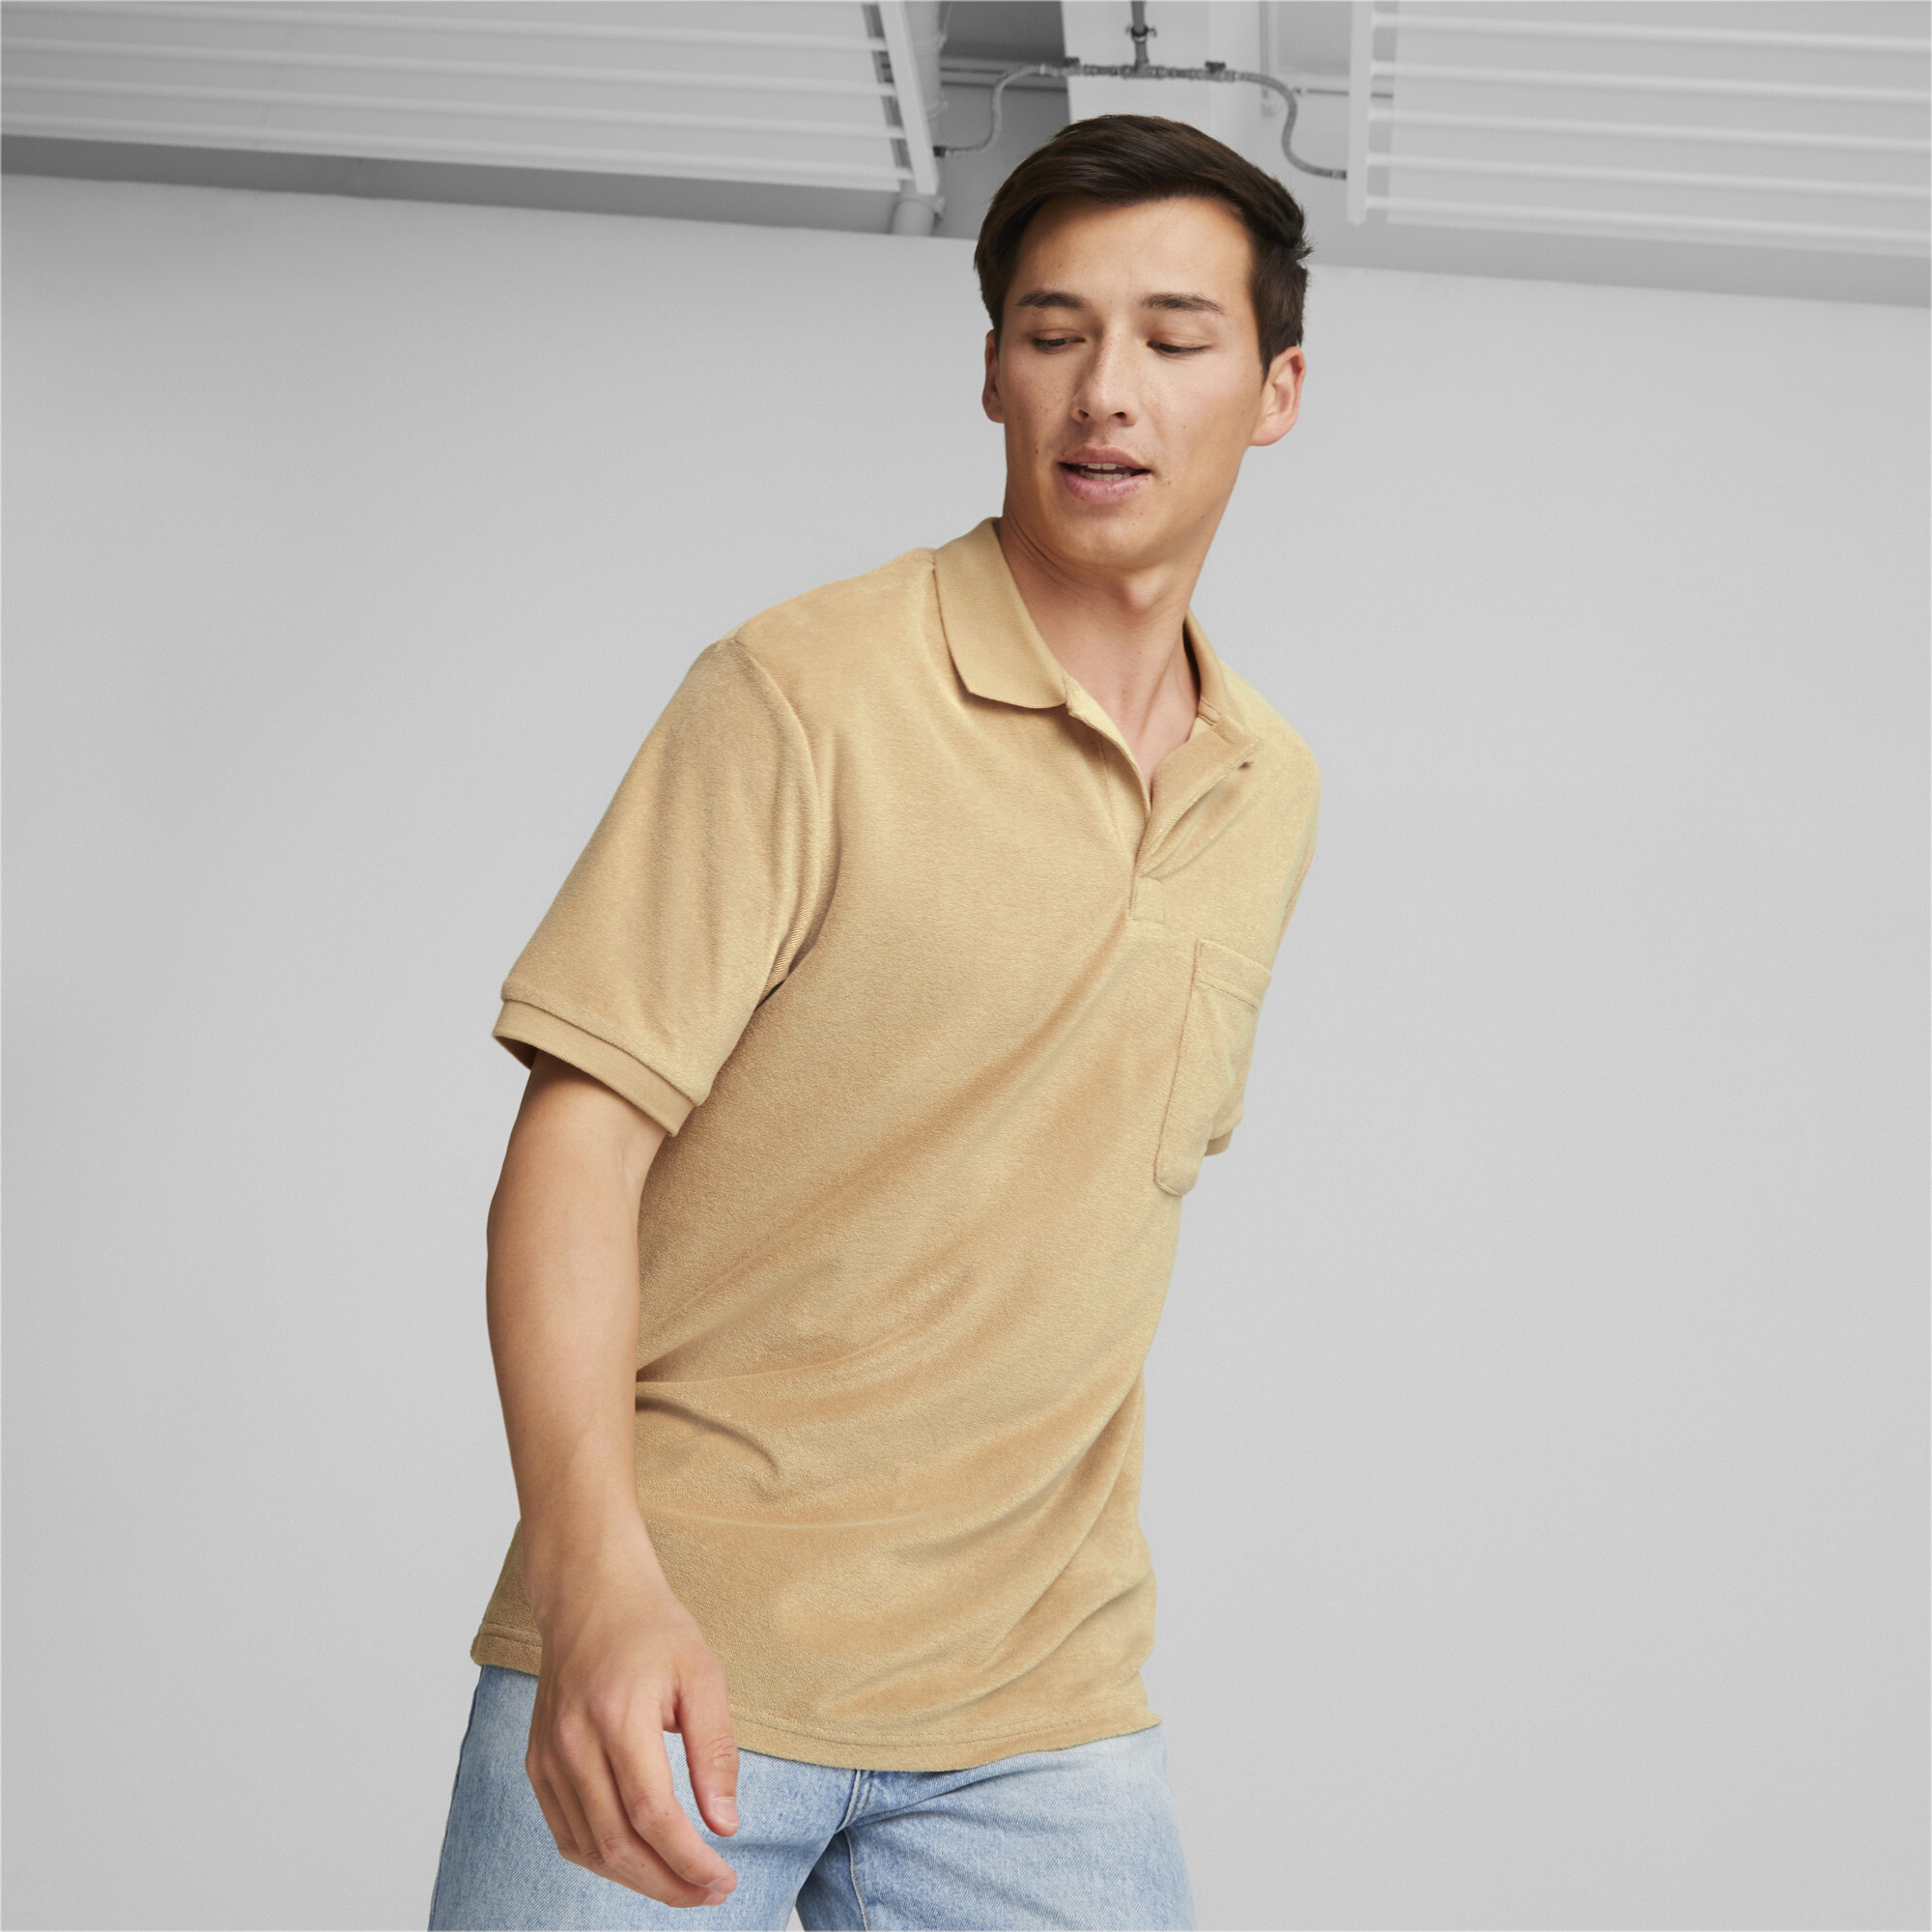 Men's Puma Classics Towelling Polo Shirt T-Shirt, Beige T-Shirt, Size XS T-Shirt, Clothing